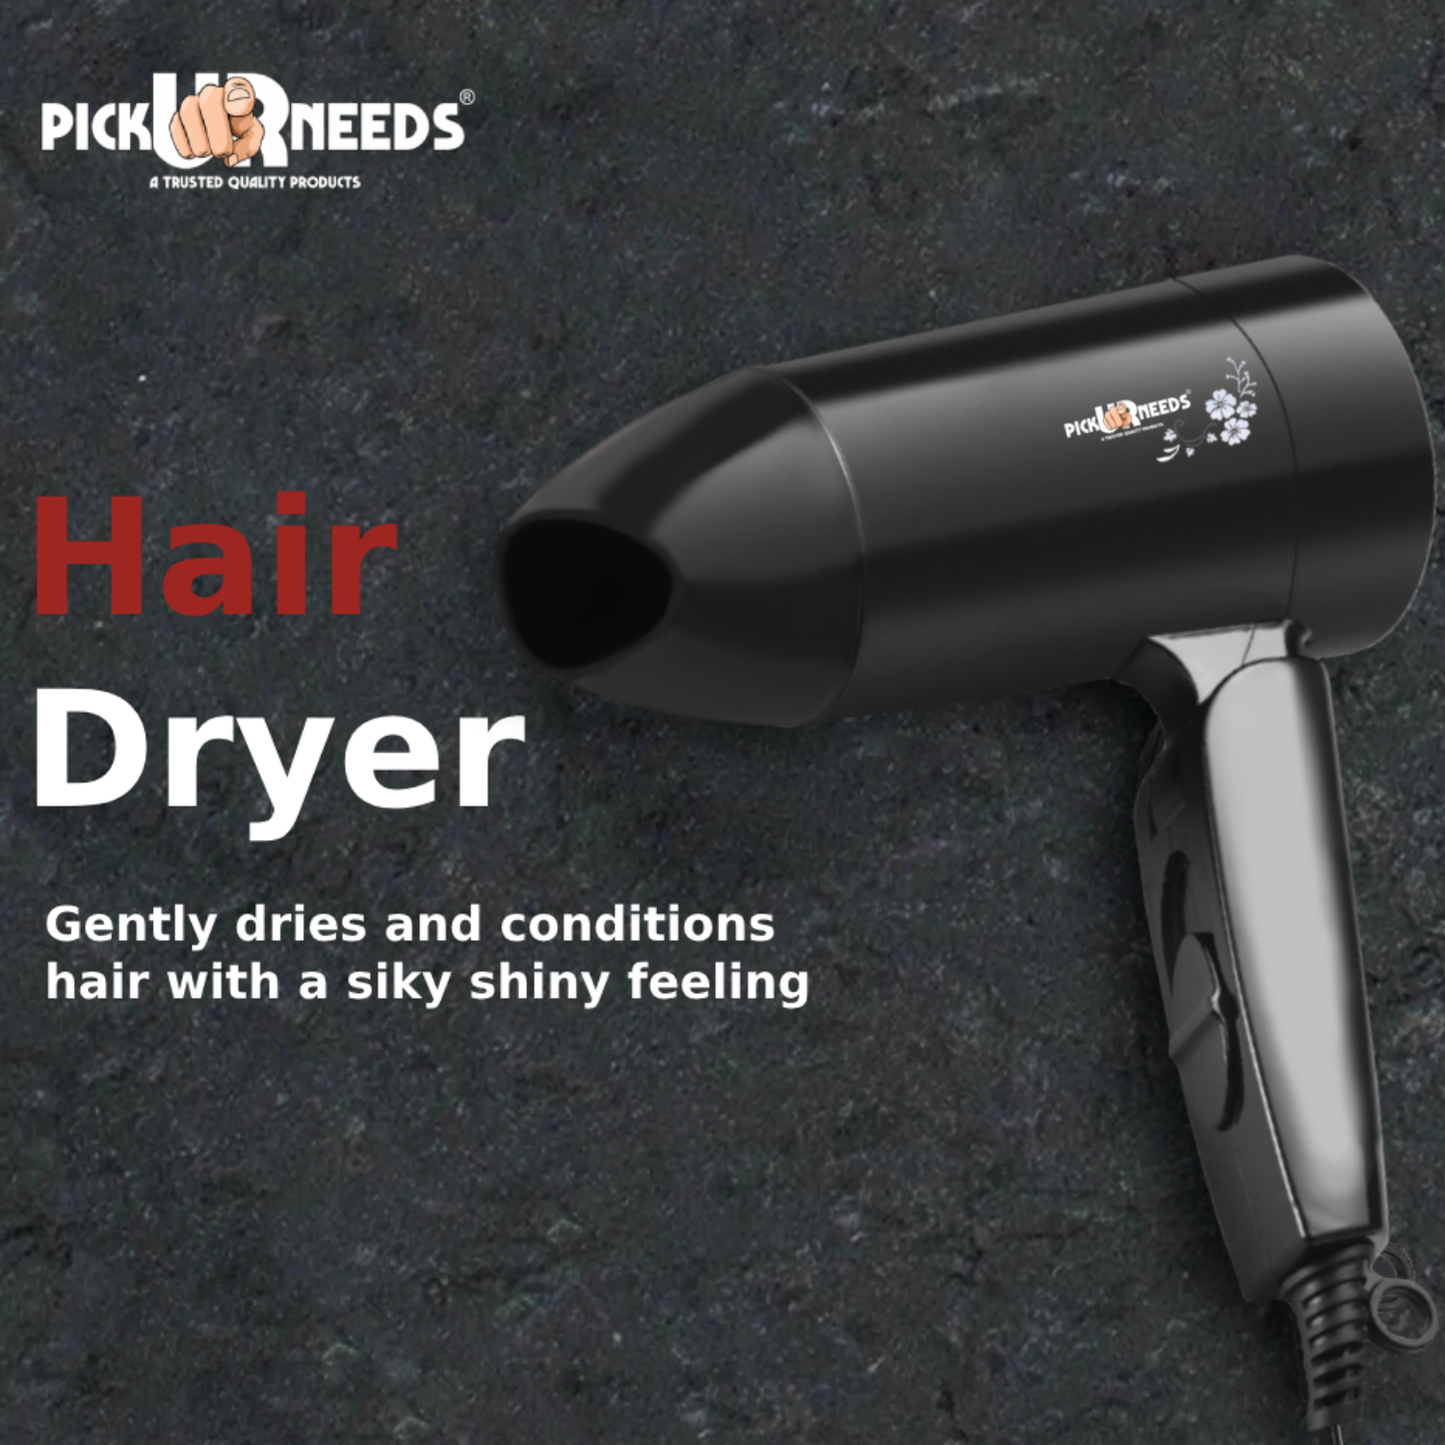 Pick Ur Needs 1800 Watt Professional Lightweight Stylish Salon Hair Dryer For Men & Women